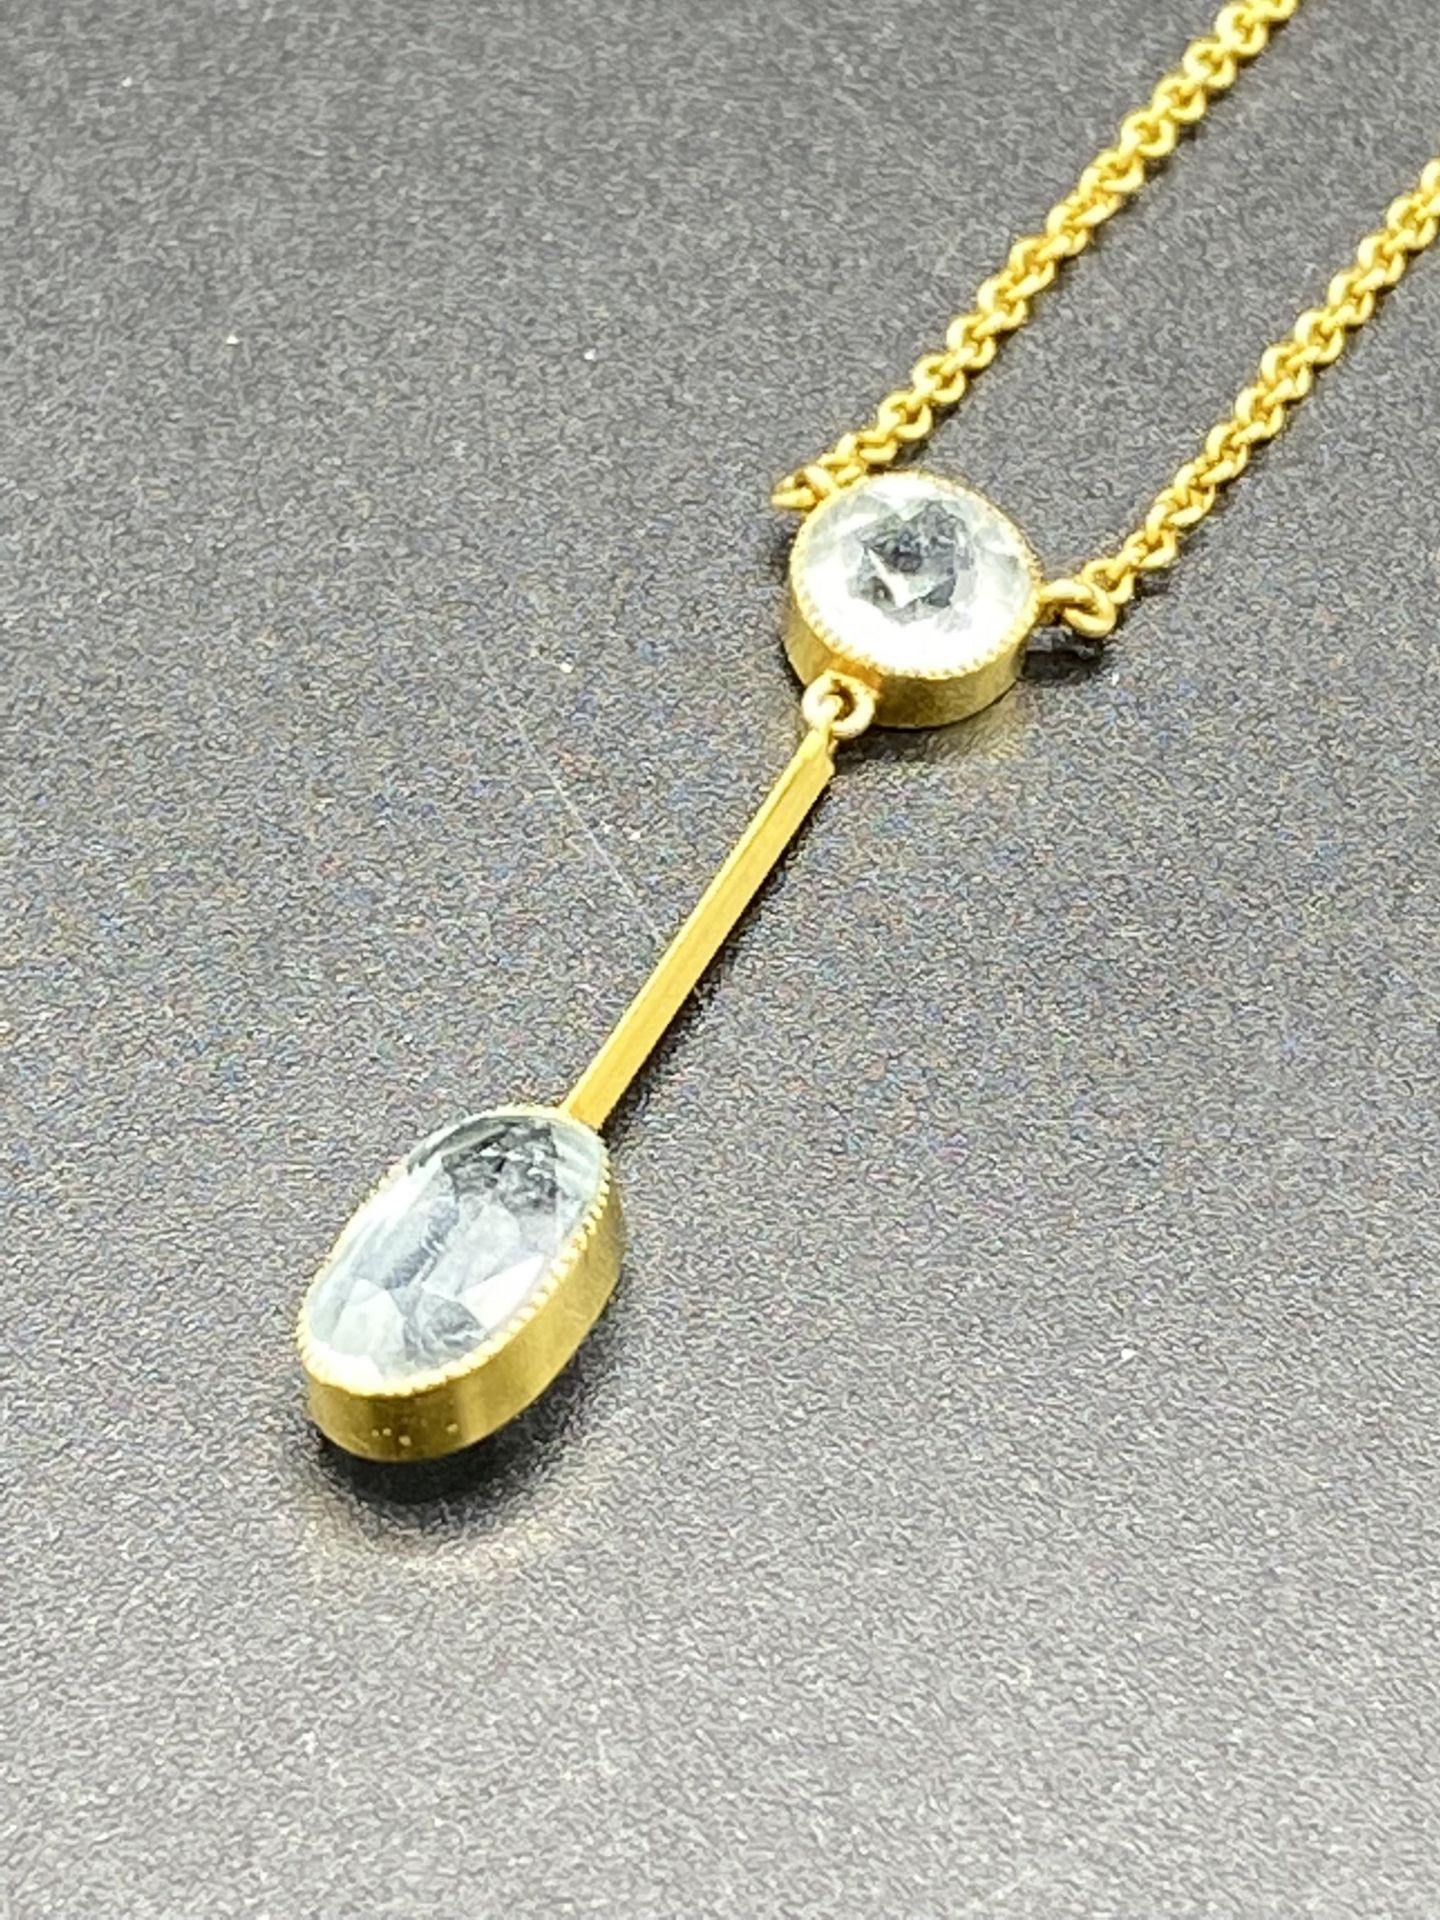 9ct gold necklace with aquamarine pendant - Image 2 of 5